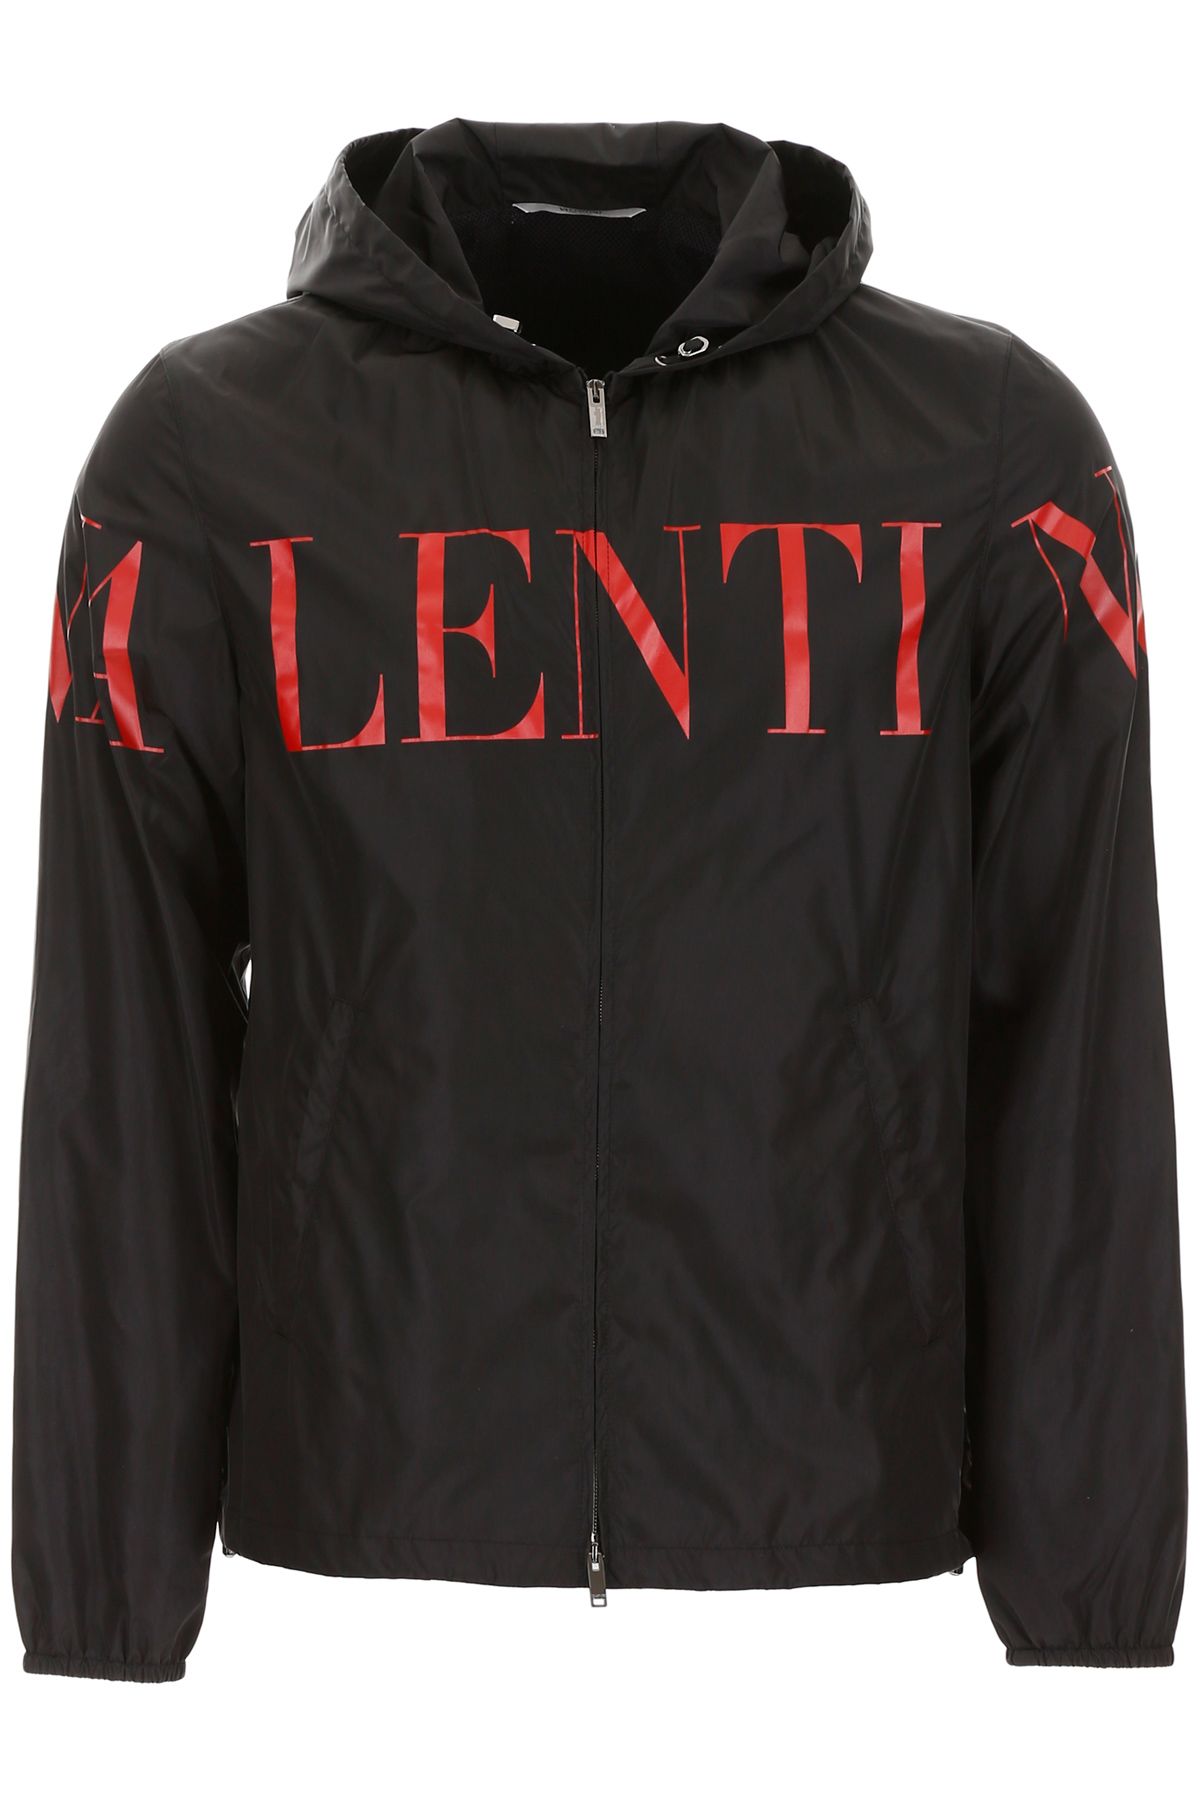 Valentino Logo Jacket | ModeSens